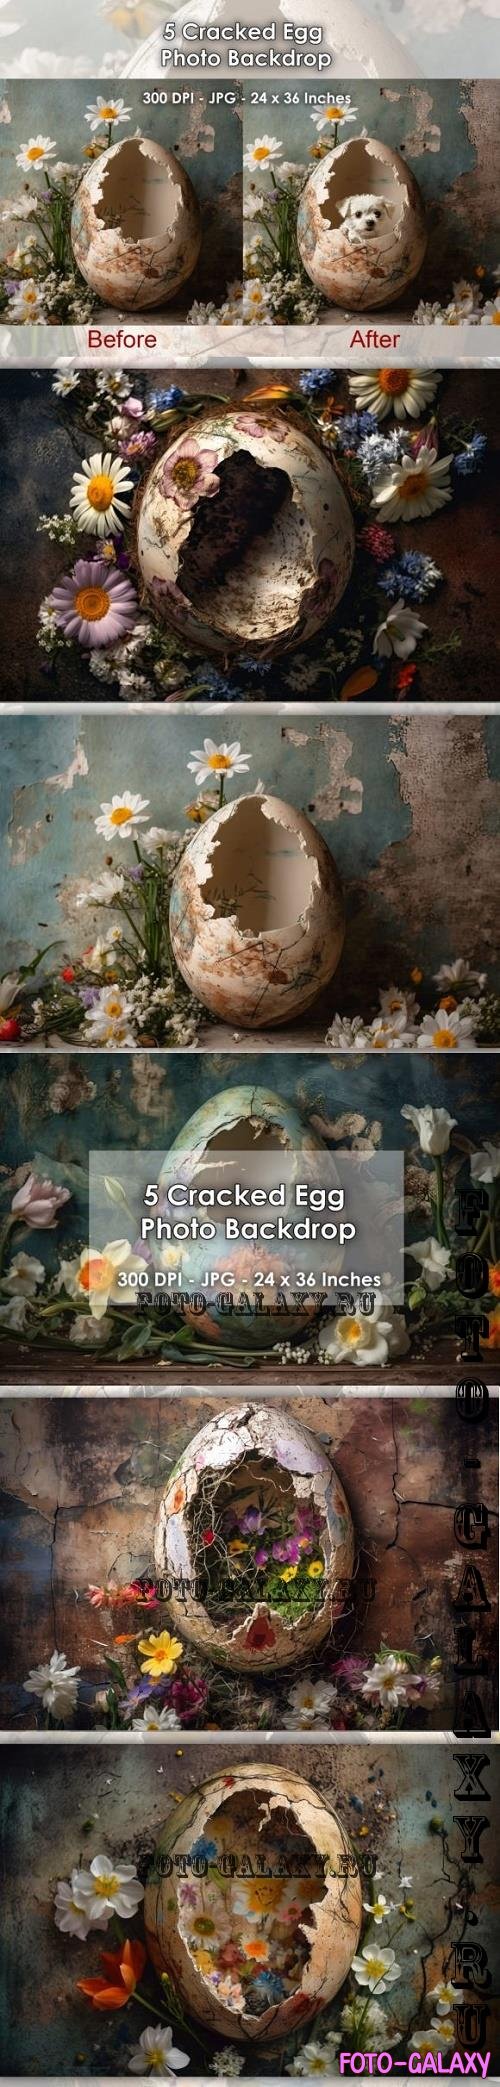 5 Cracked Eggs Photo Backdrop